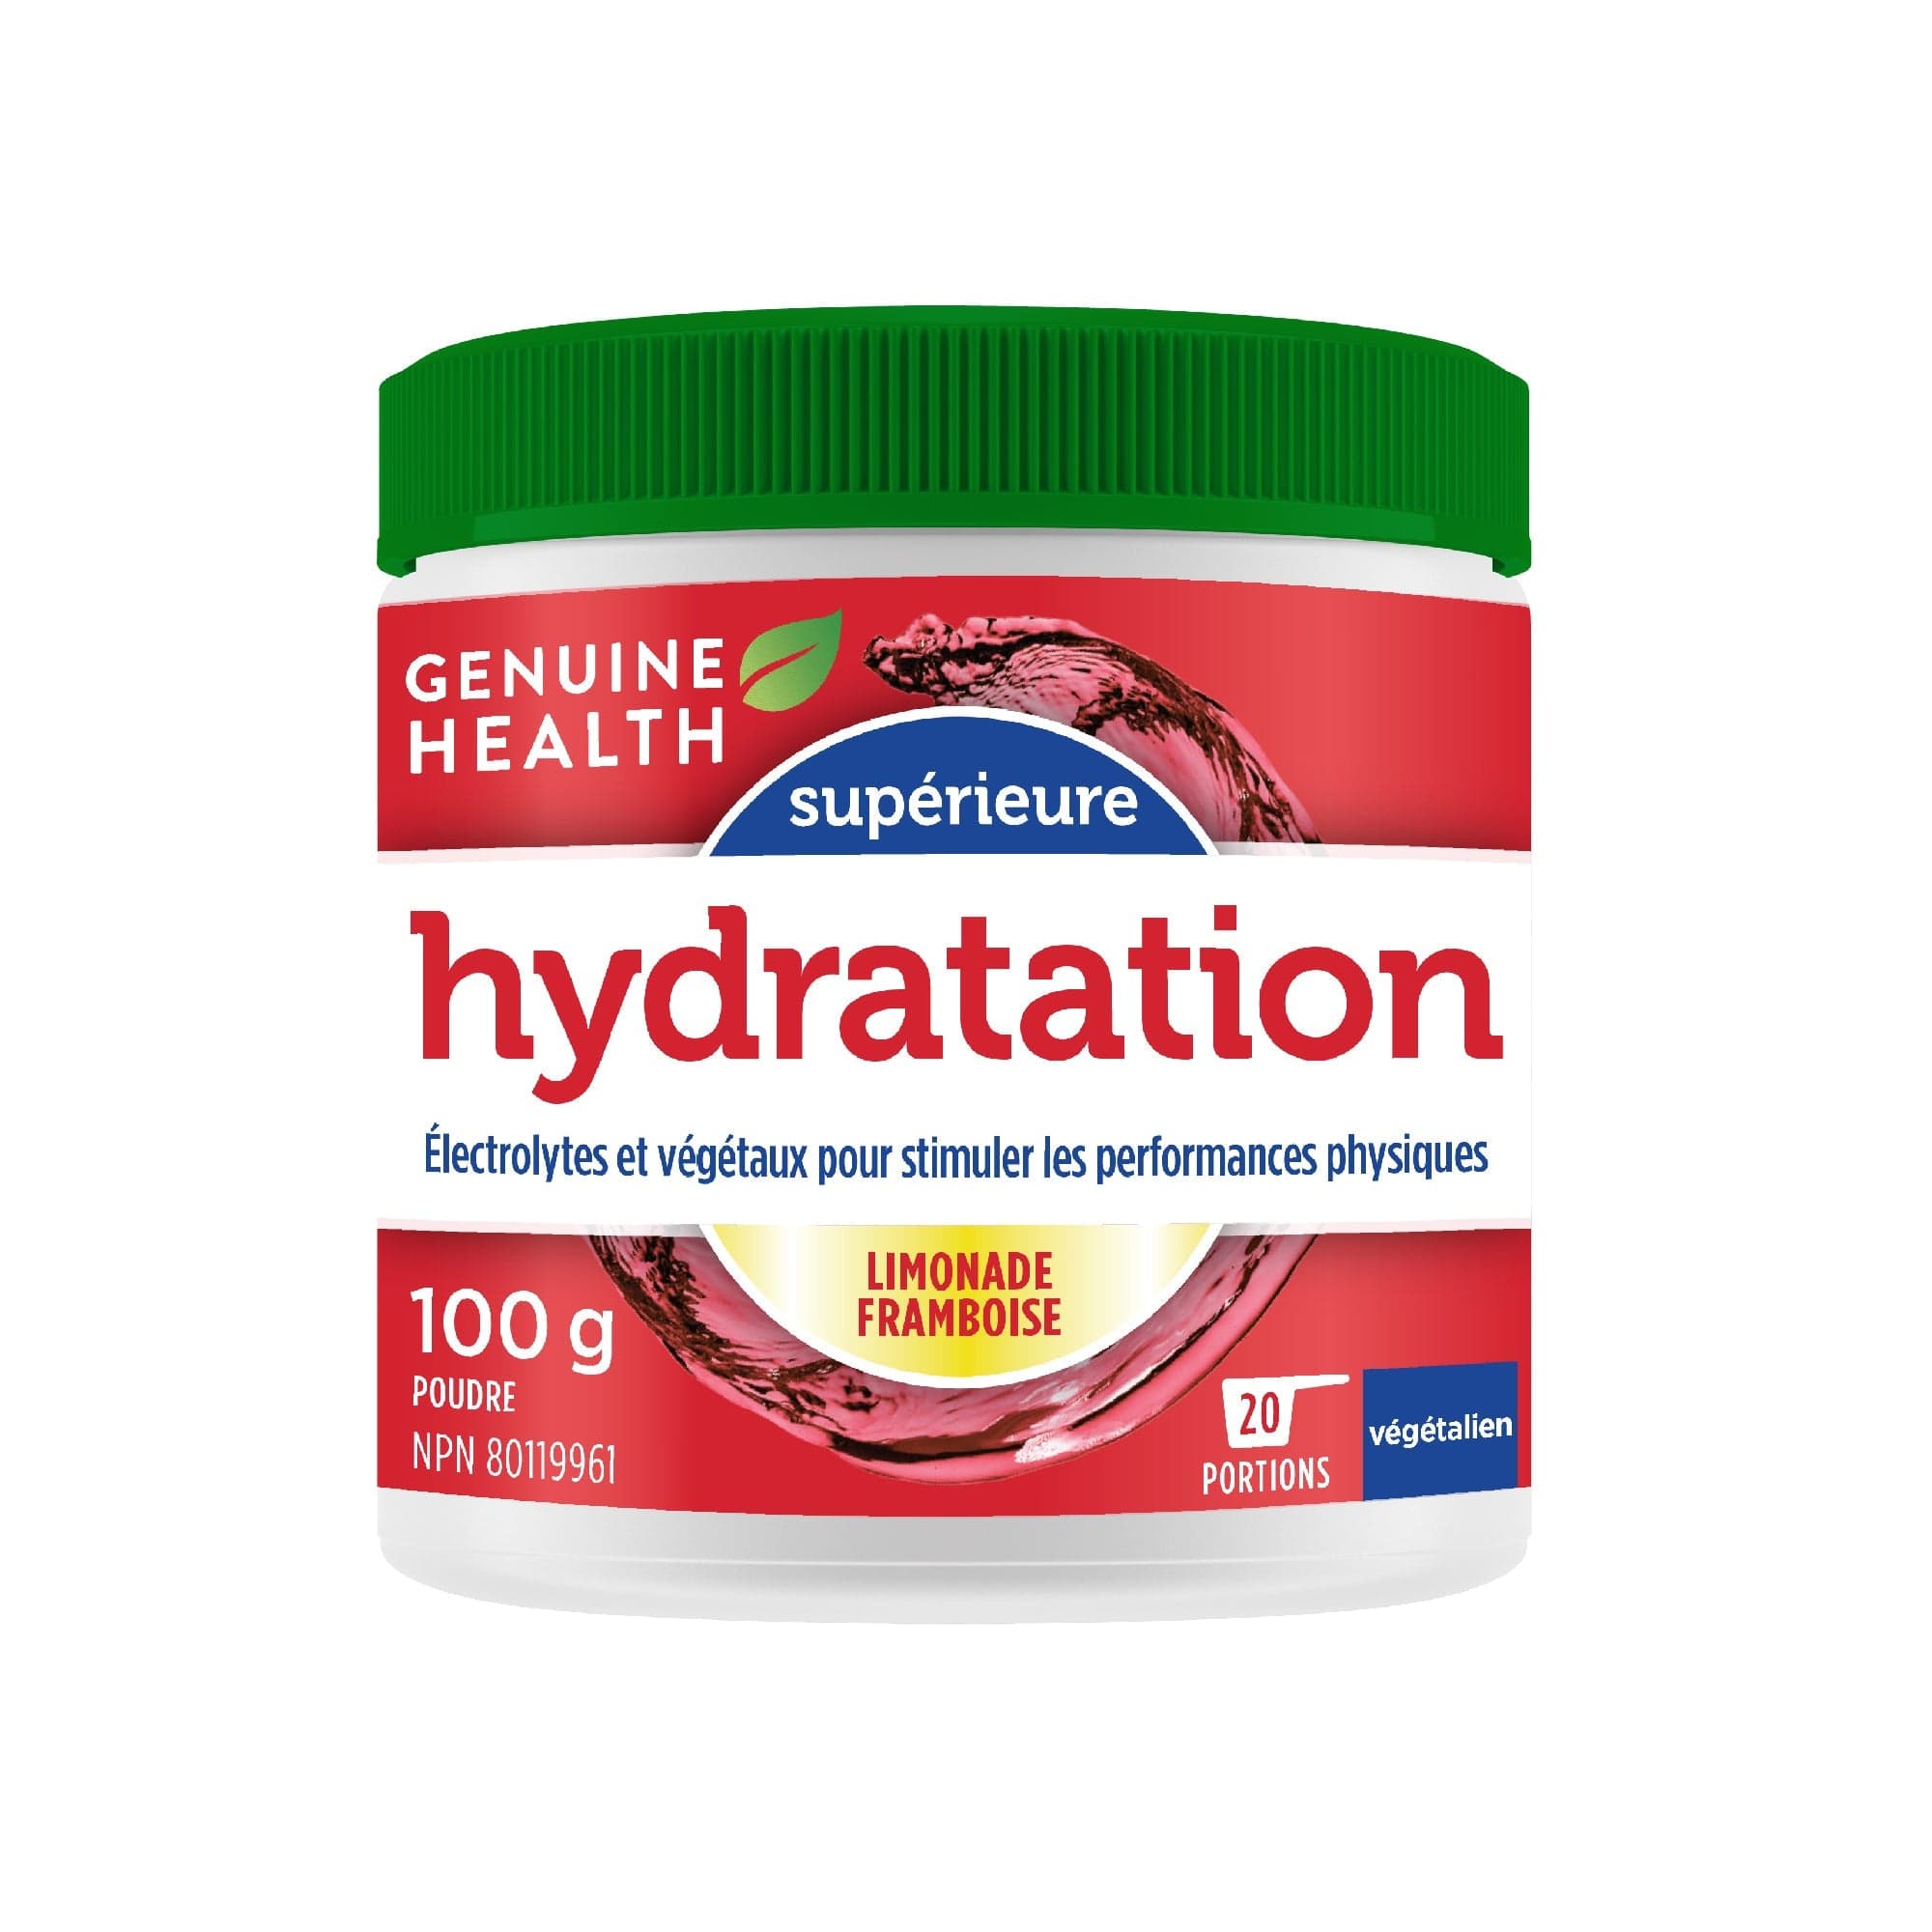 GENUINE HEALTH Suppléments Enhanced hydratation (limonade framboises)  100g